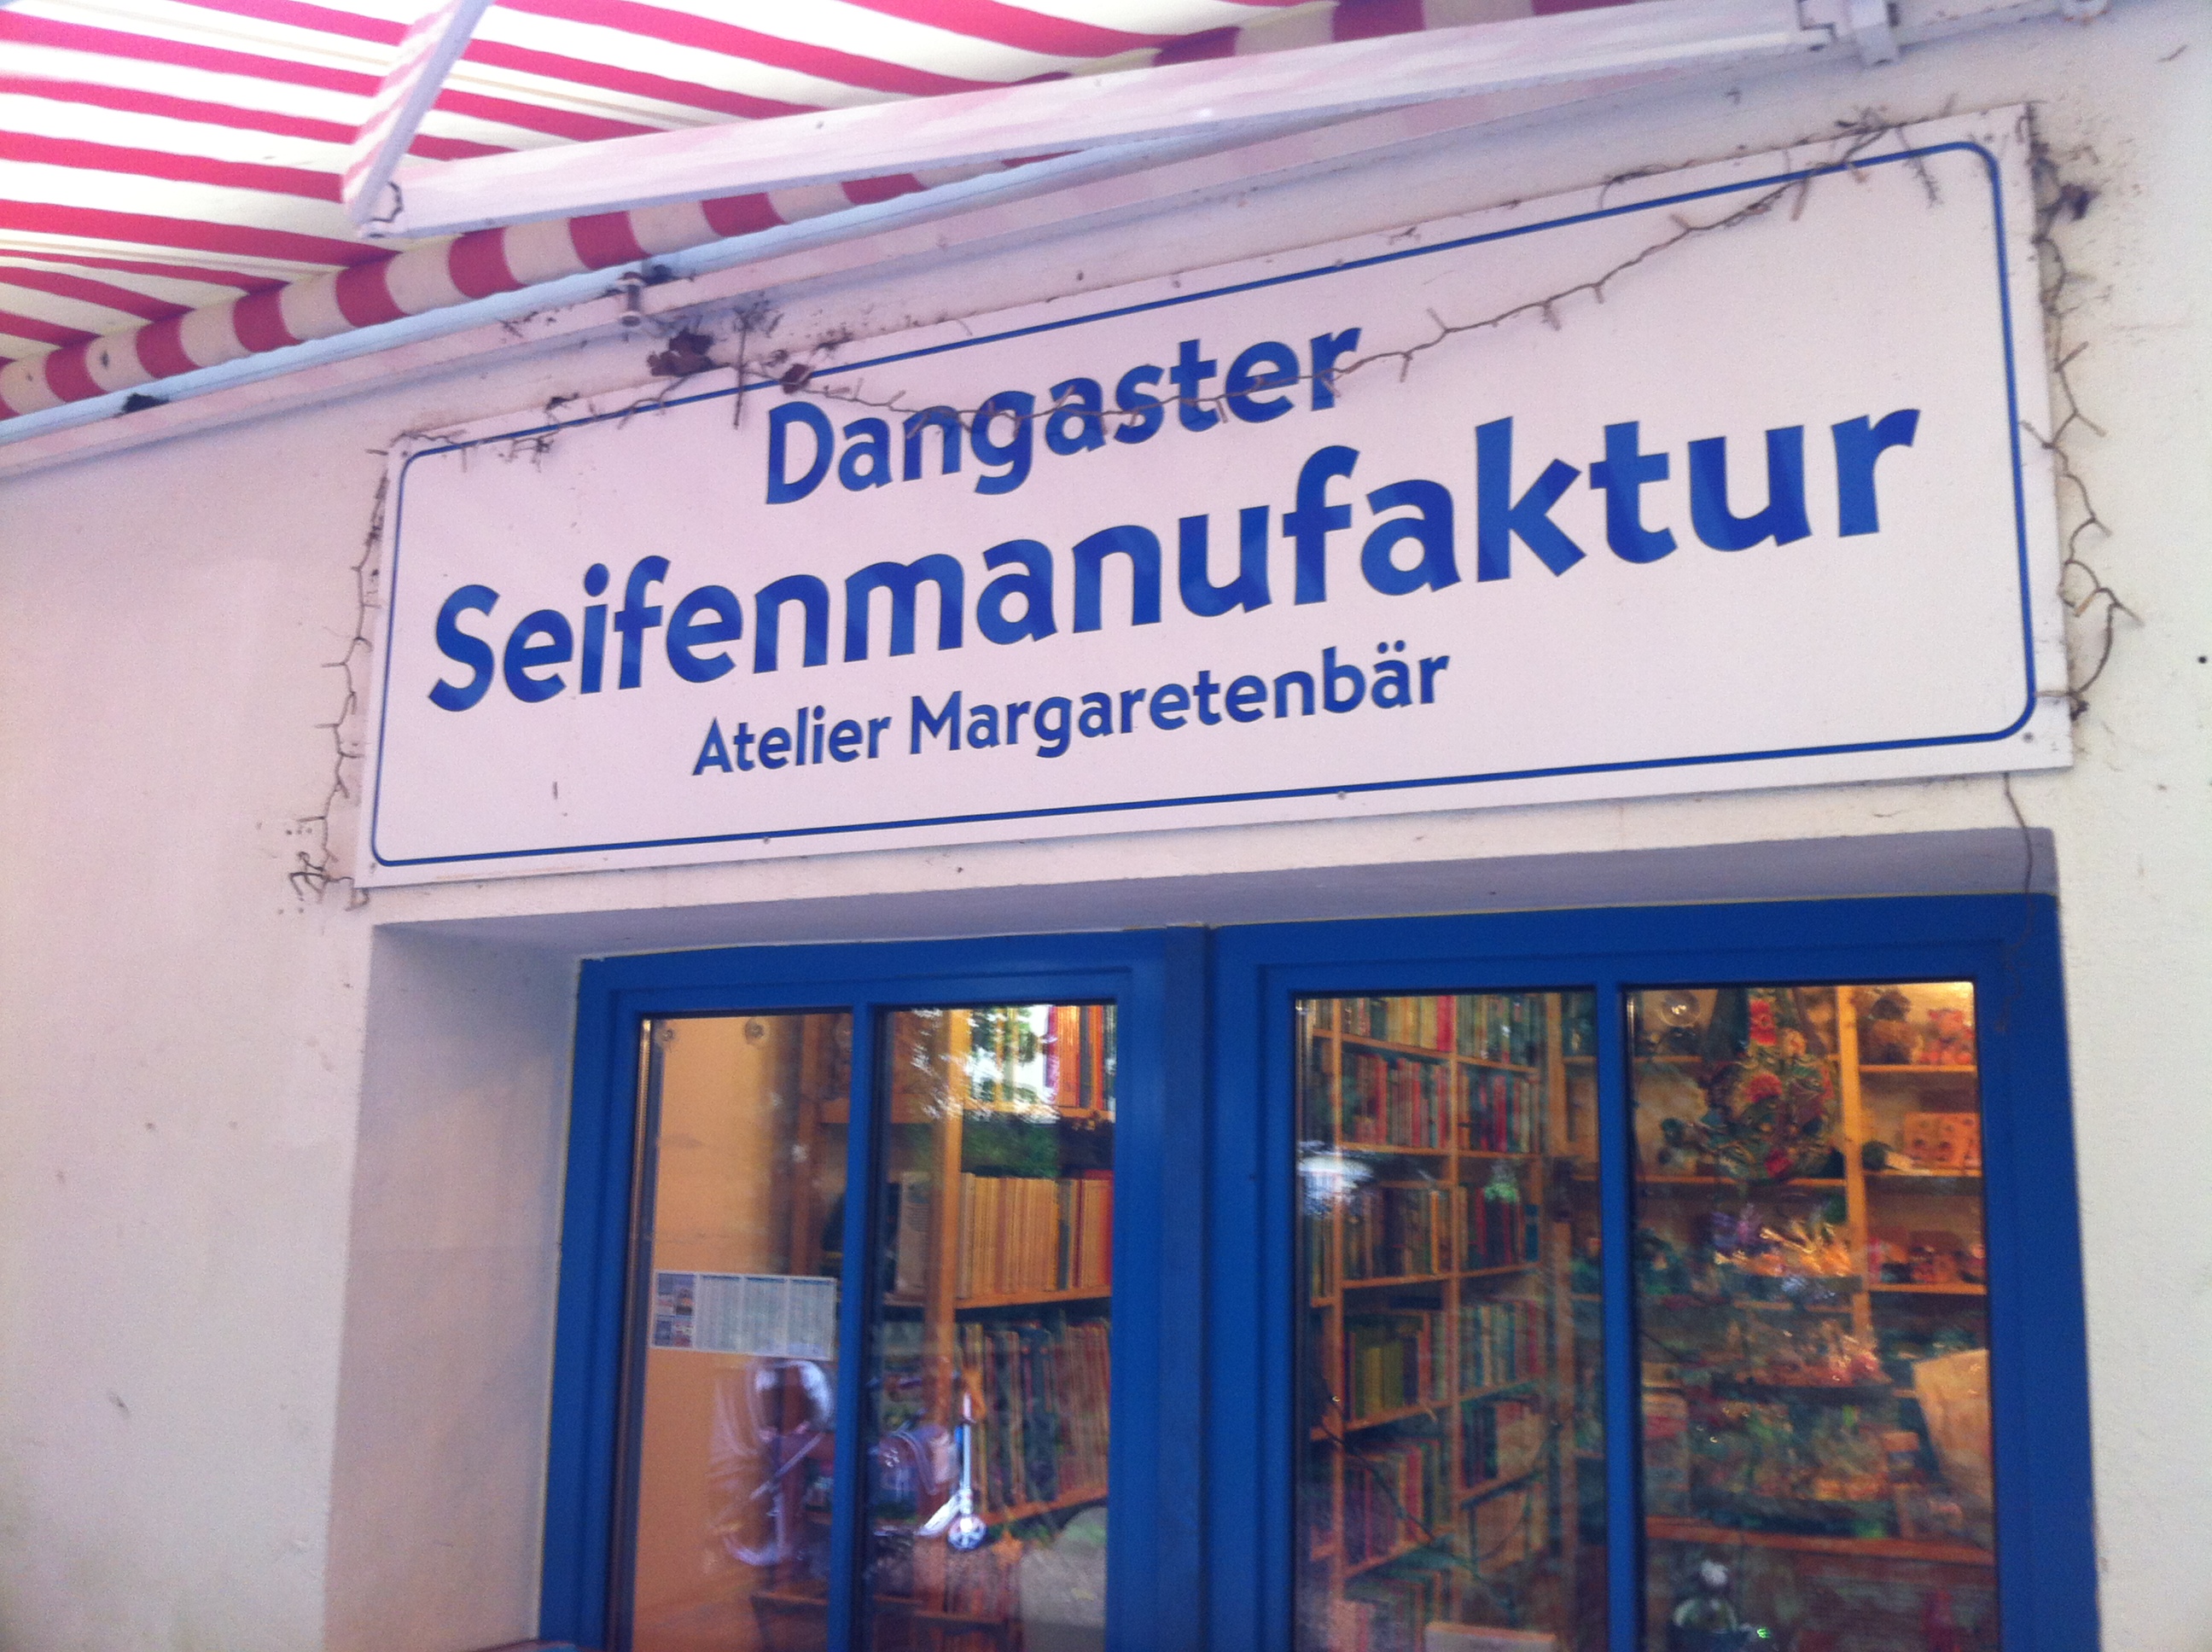 Seifenmanufaktur in Dangast